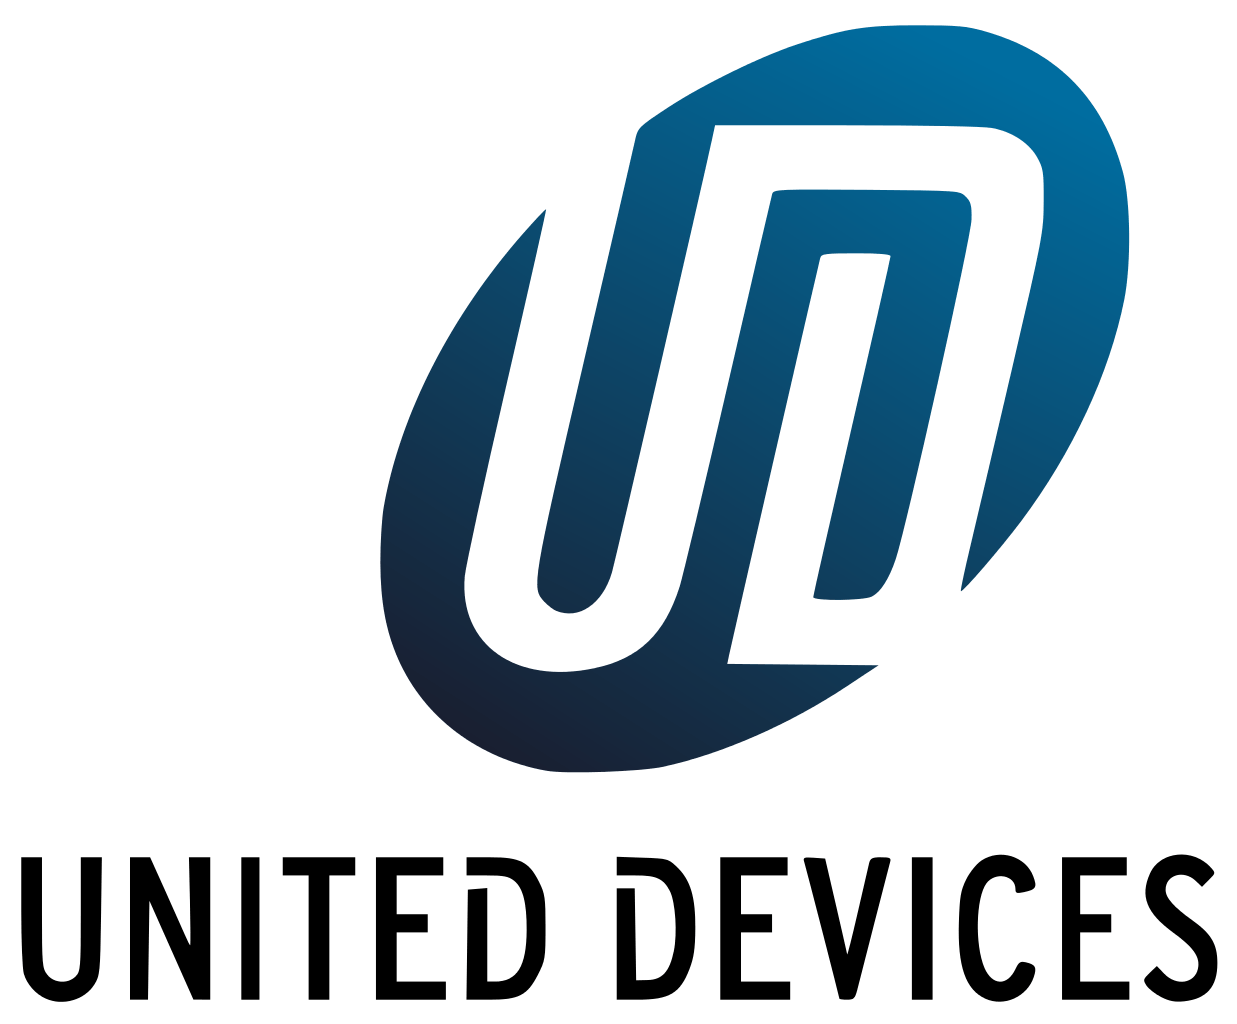 Ud Logo - File:UnitedDevicesLogo.svg